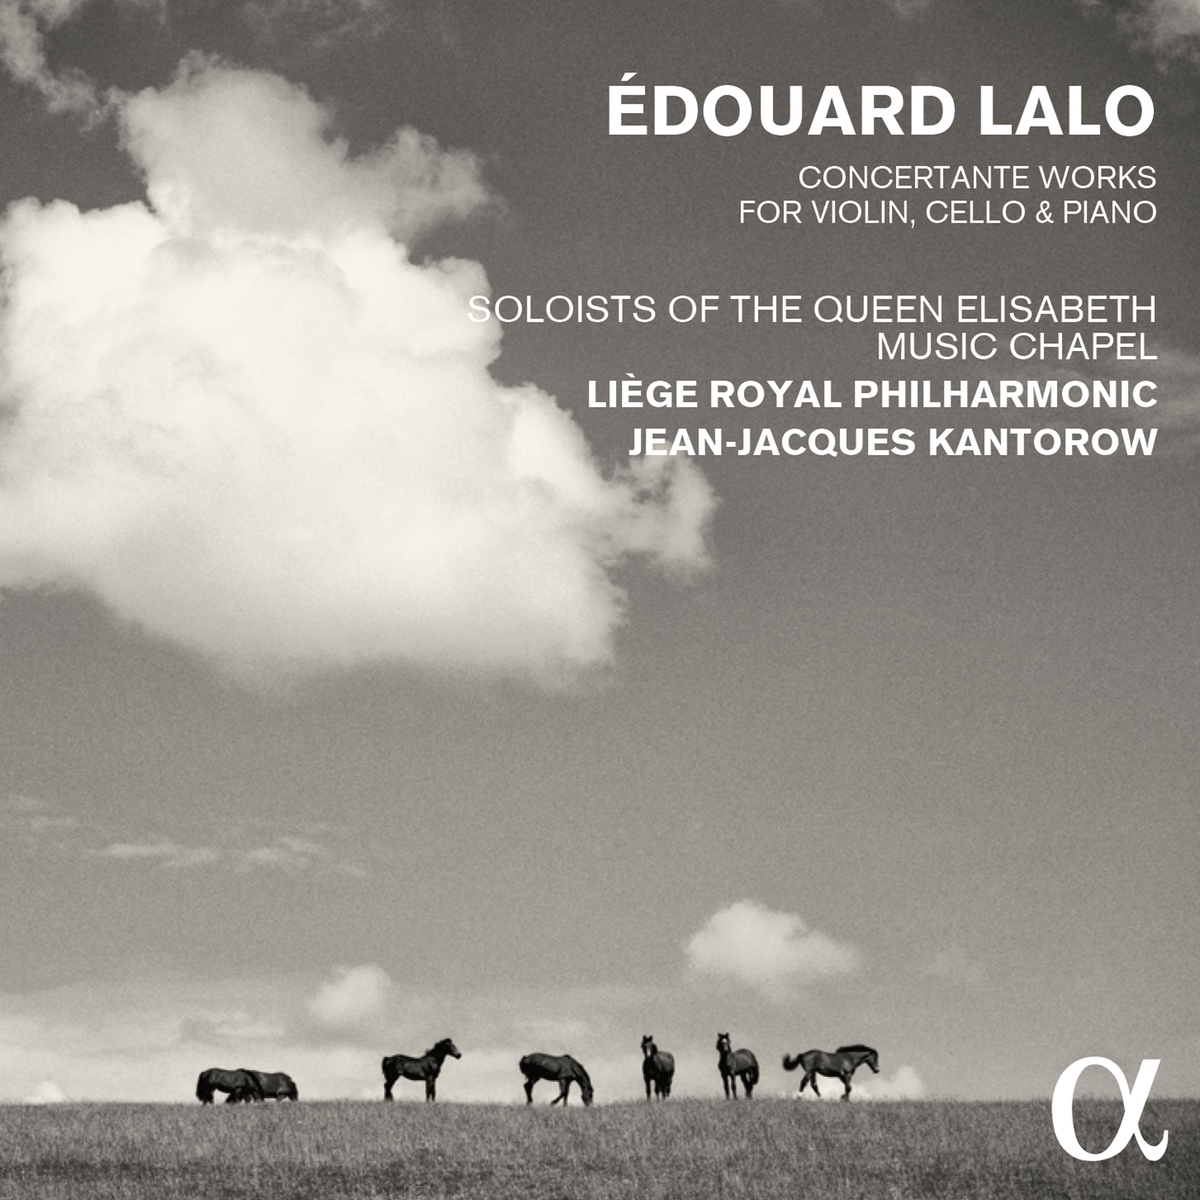 Liege Royal Philharmonic, Jean-Jacques Kantorow - Edouard Lalo: Concertante Works for Violin, Cello & Piano (2016) [Qobuz FLAC 24bit/96kHz]